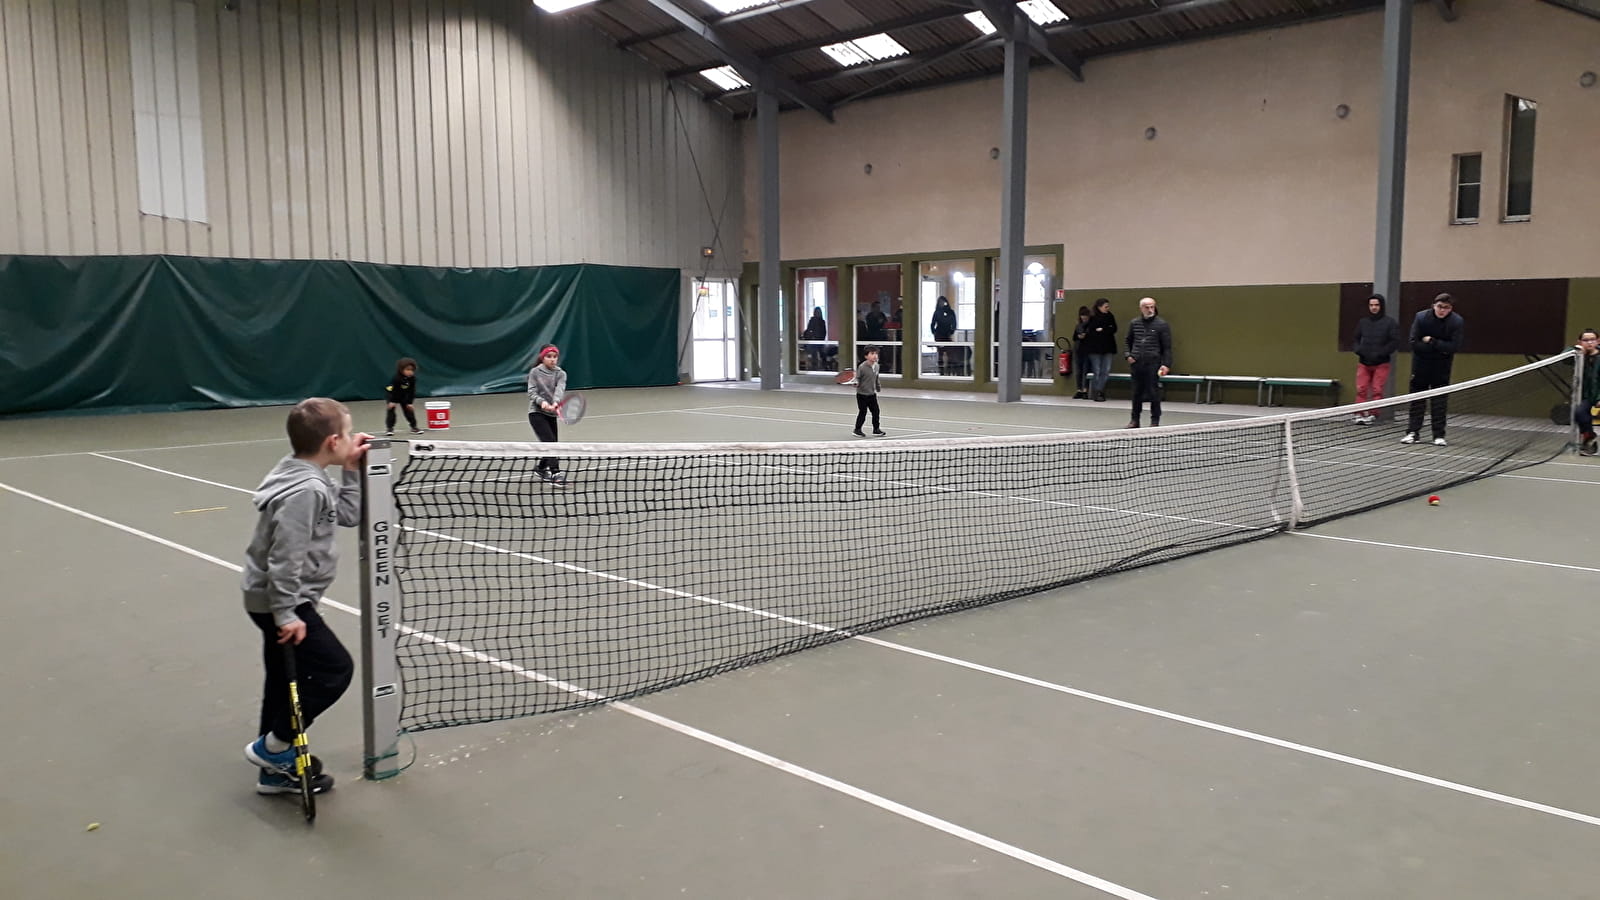 Tennis Club de Cluny